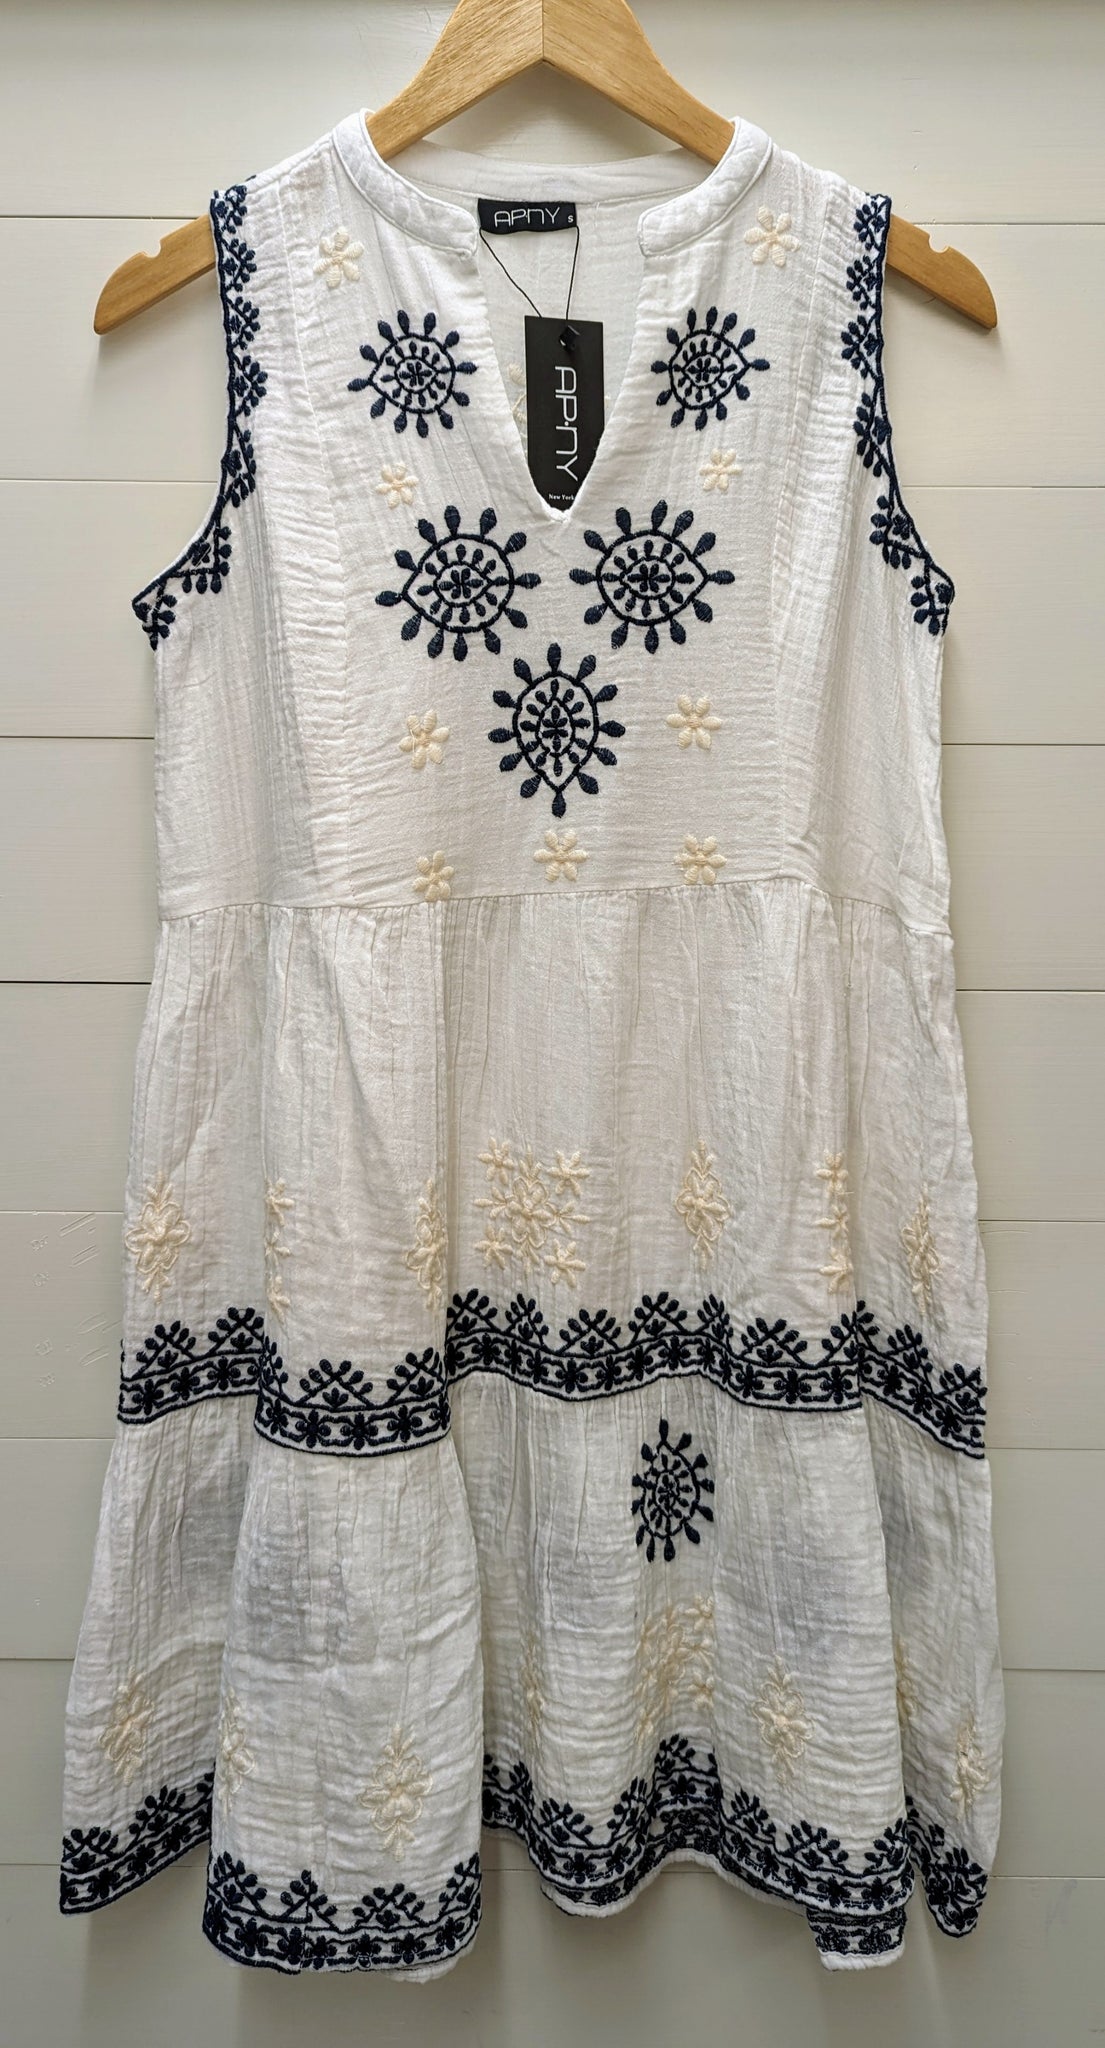 Sleeveless Dress W/Embroidered Detail-White Multi